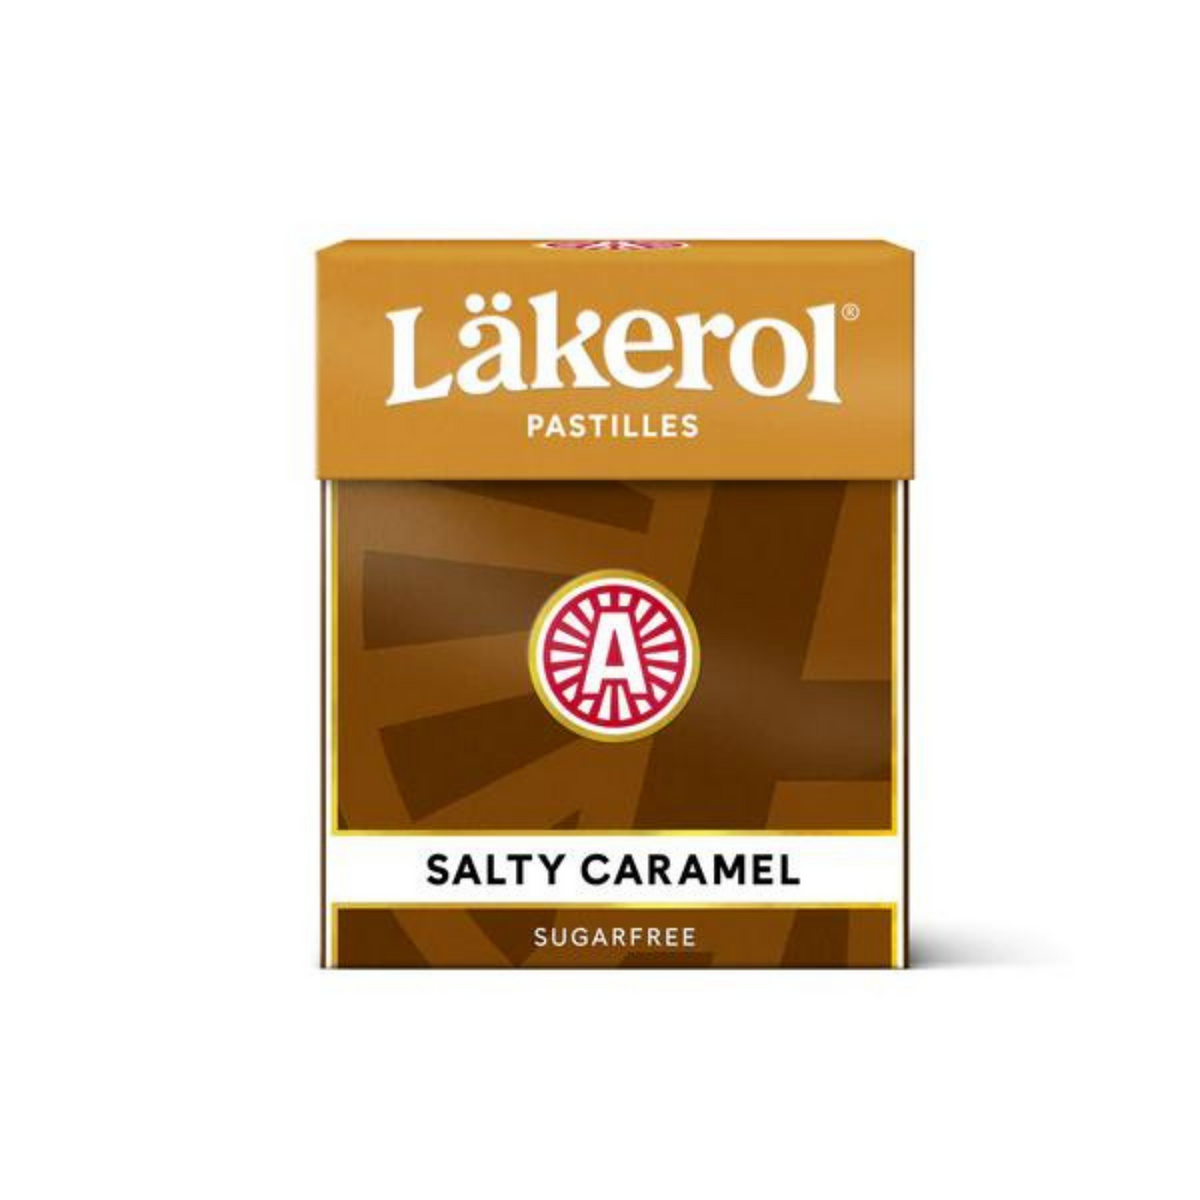 Primary image of Salty Caramel Sugar-Free Pastilles